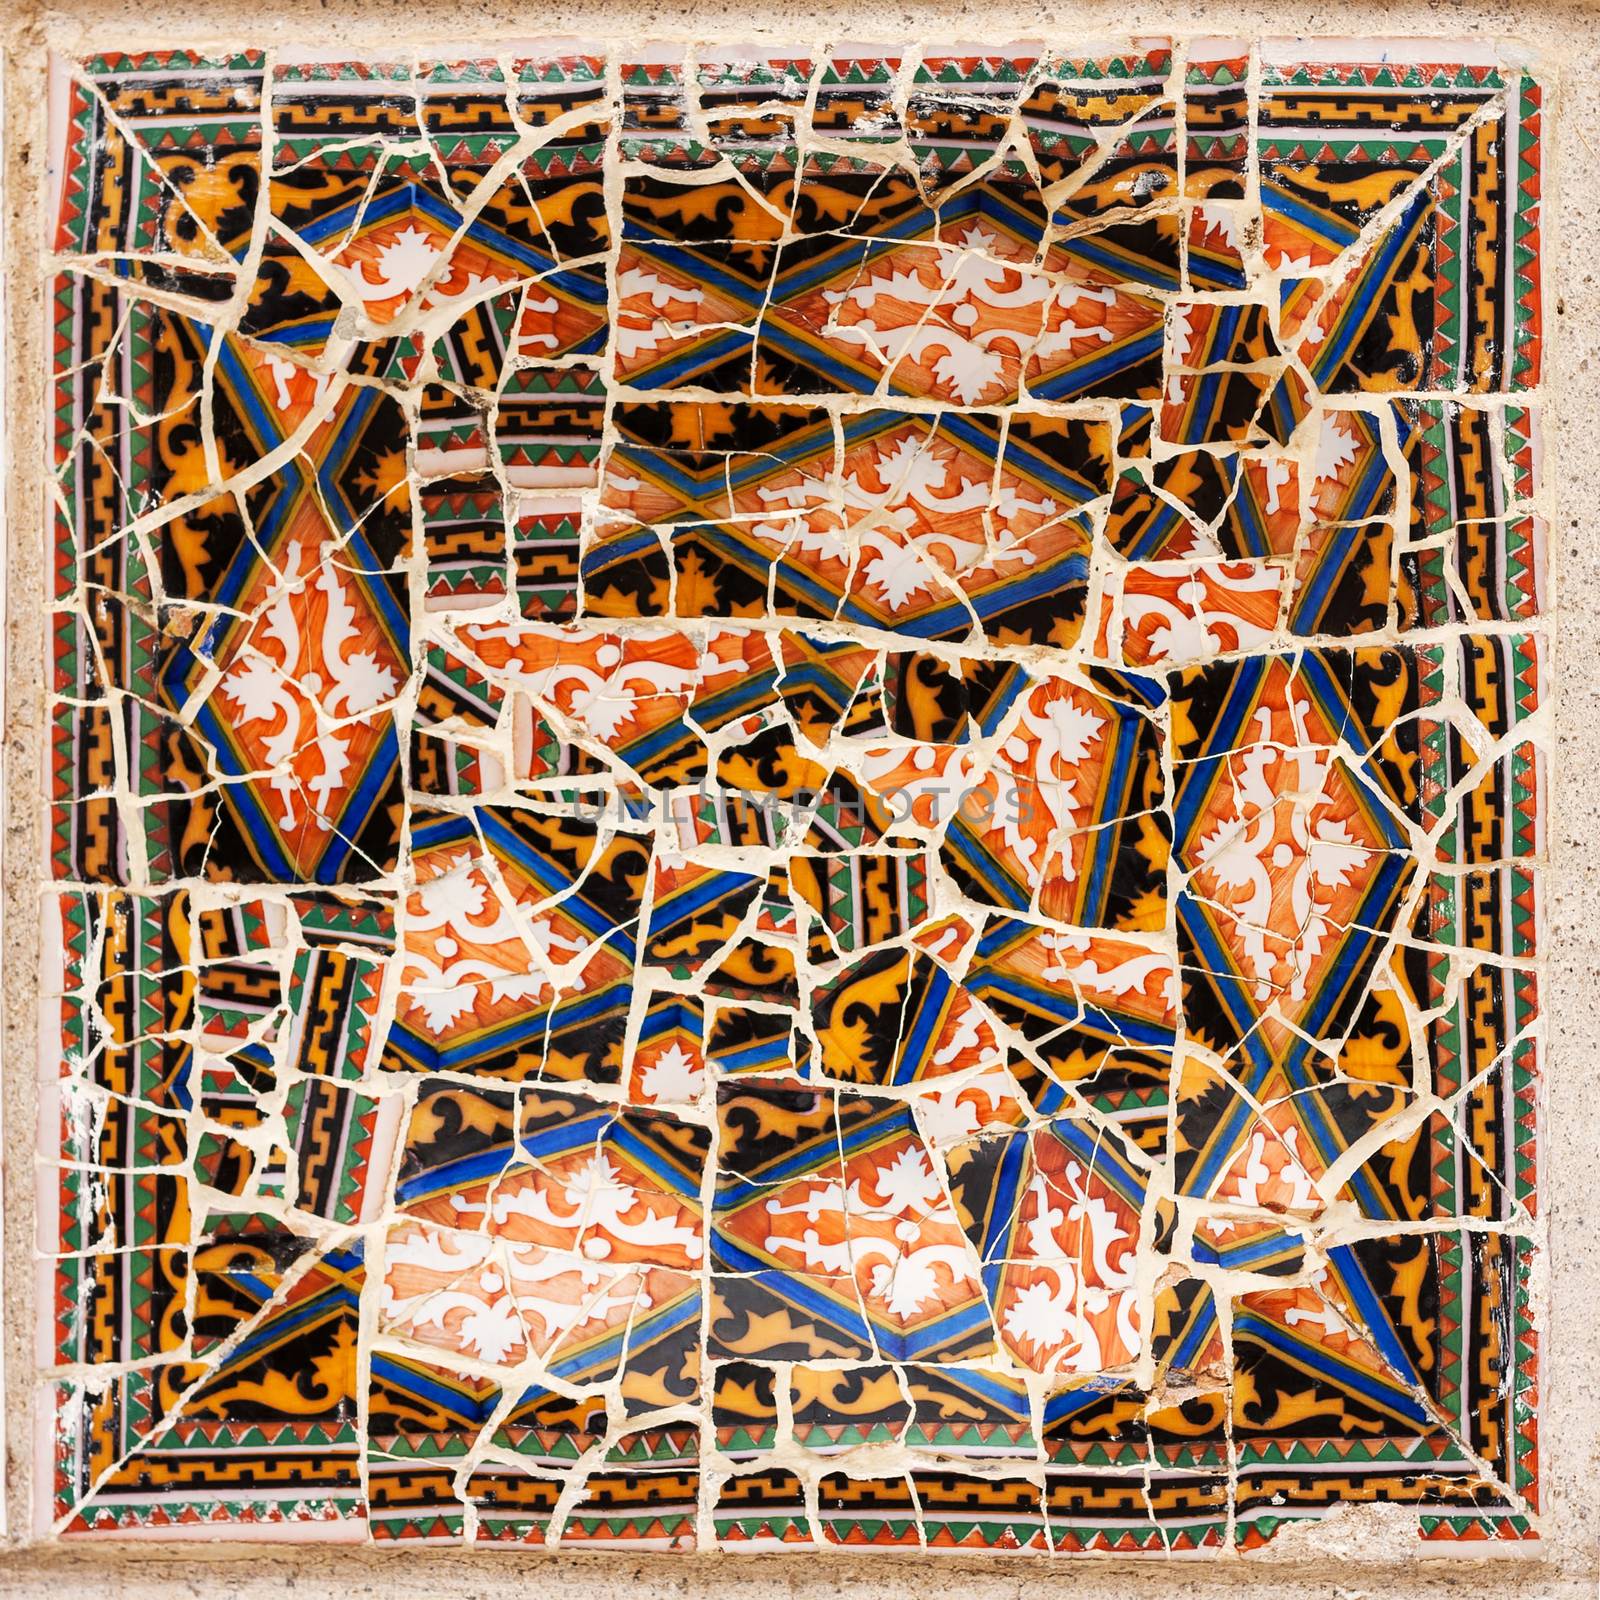 Patterns mota by Digoarpi